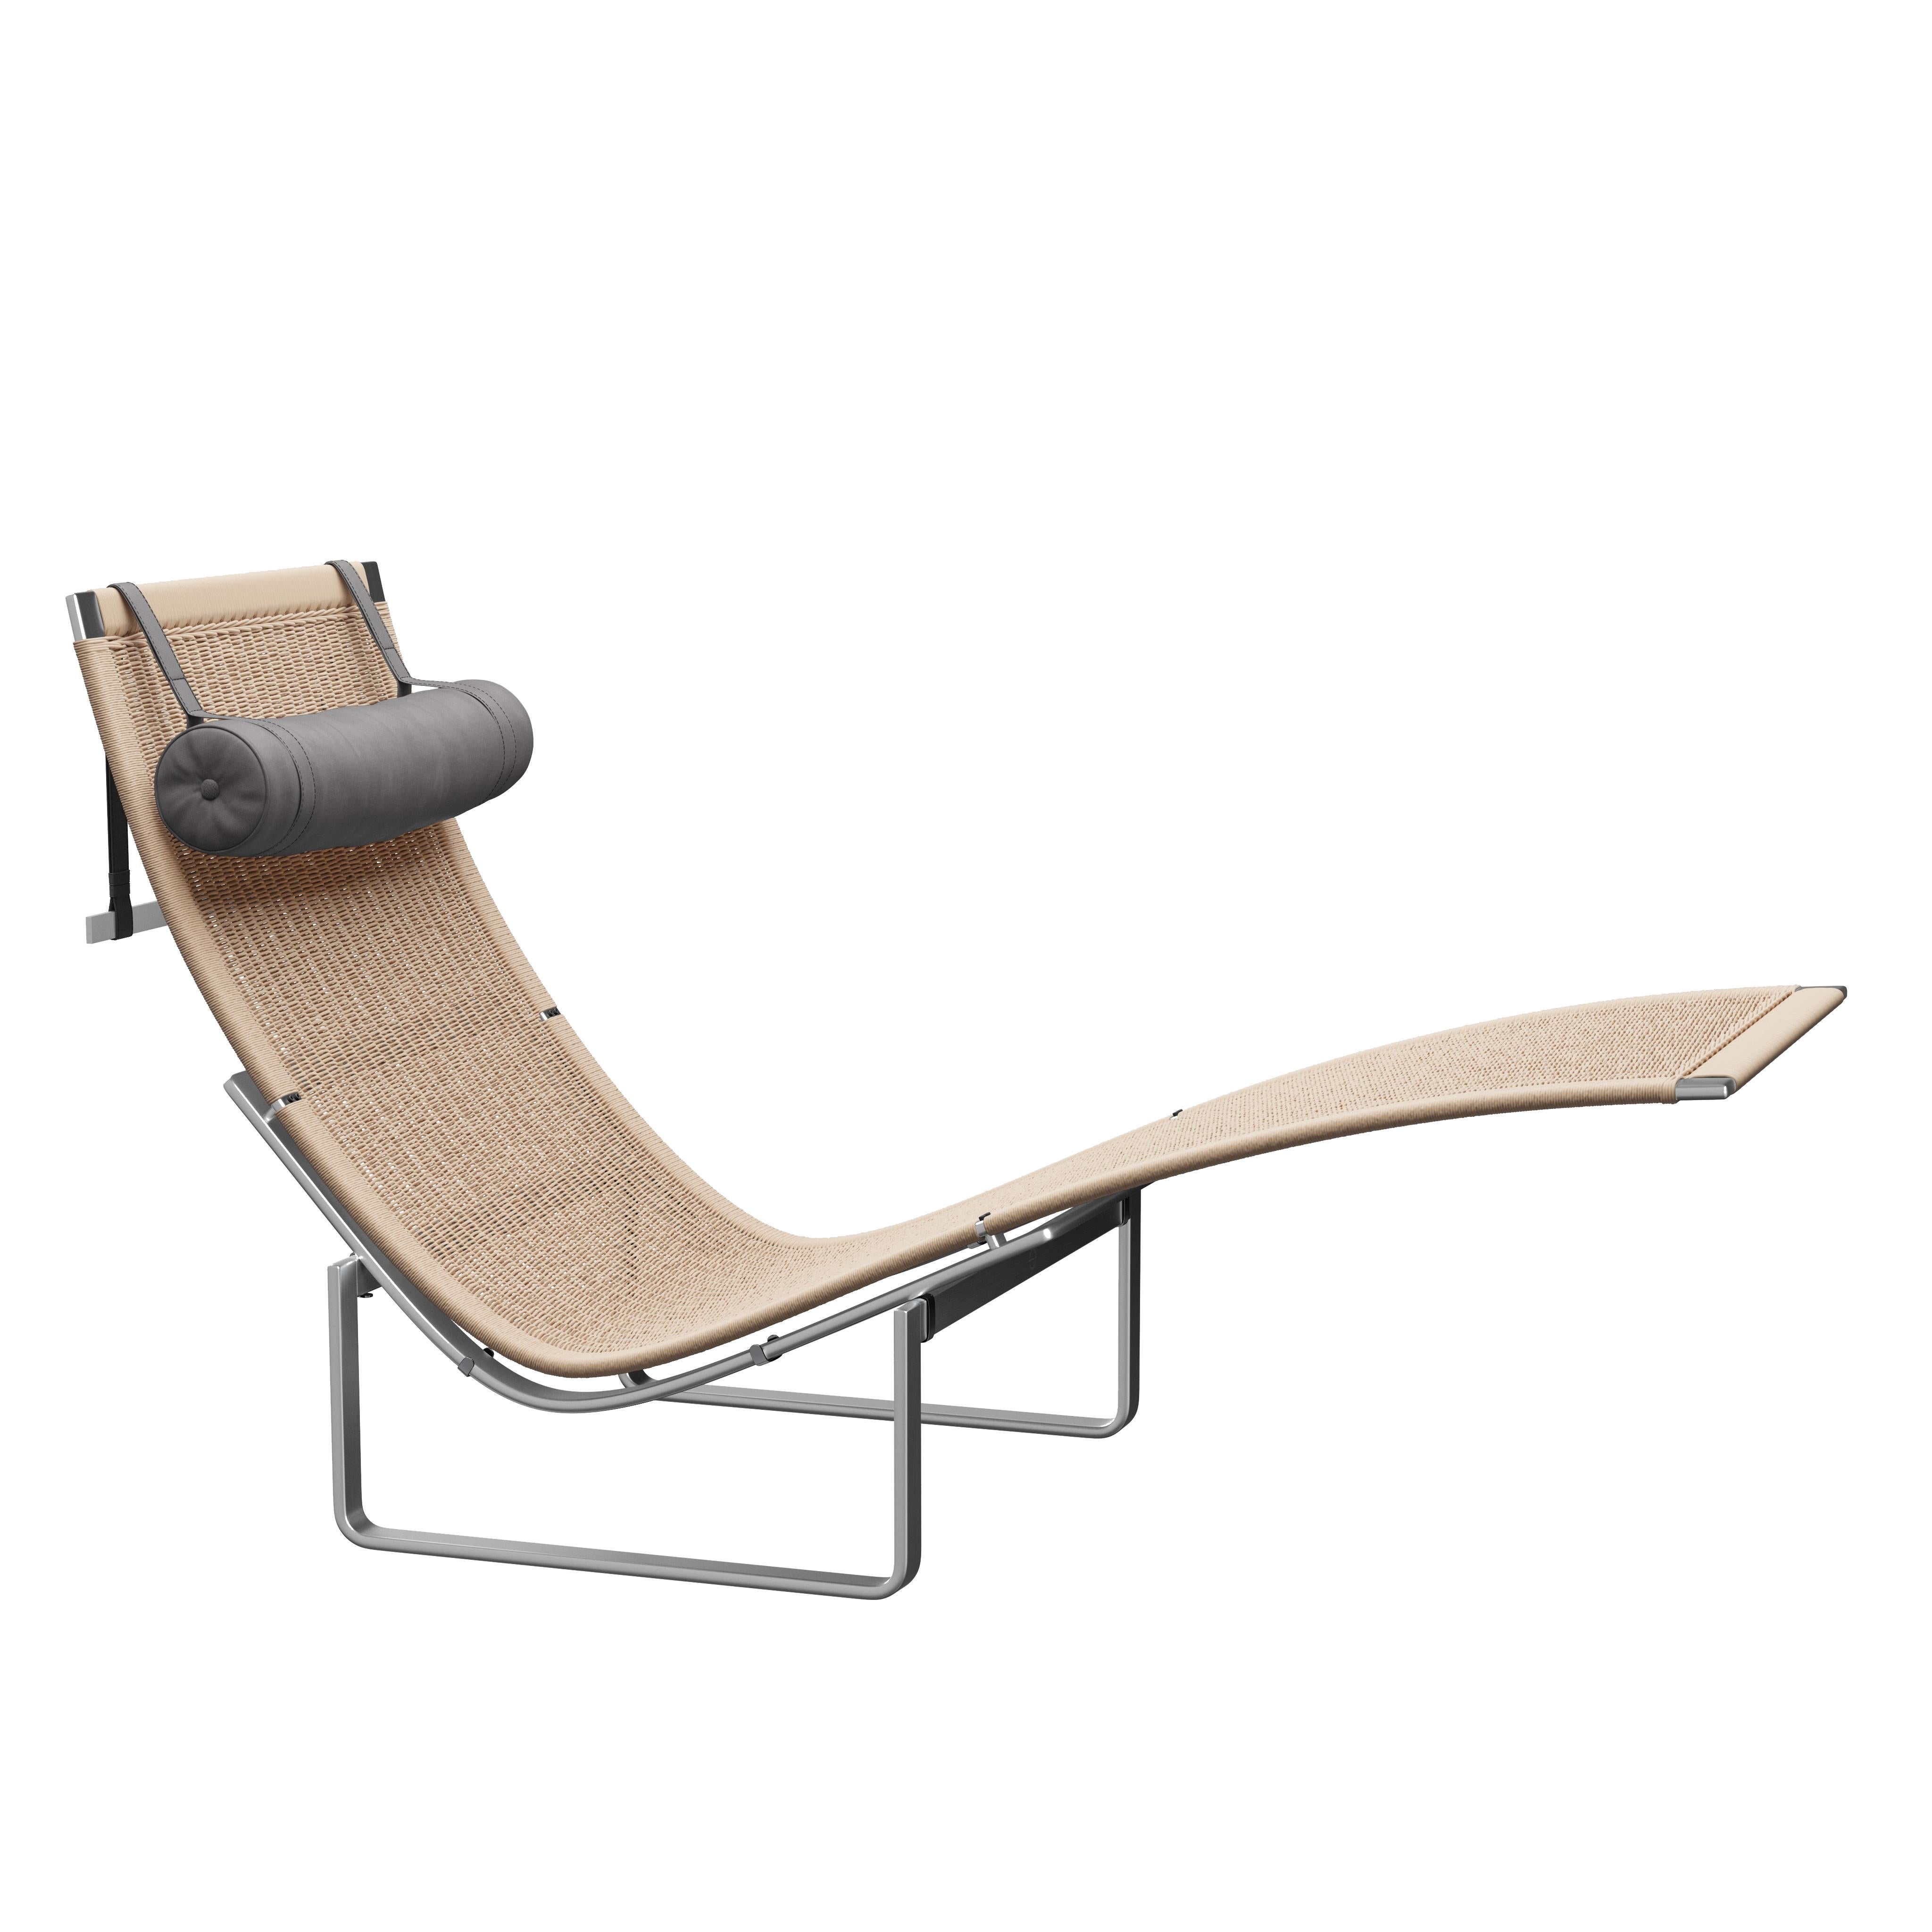 Danish Poul Kjærholm 'PK24' Wicker Lounge Chair for Fritz Hansen with Leather Headrest For Sale